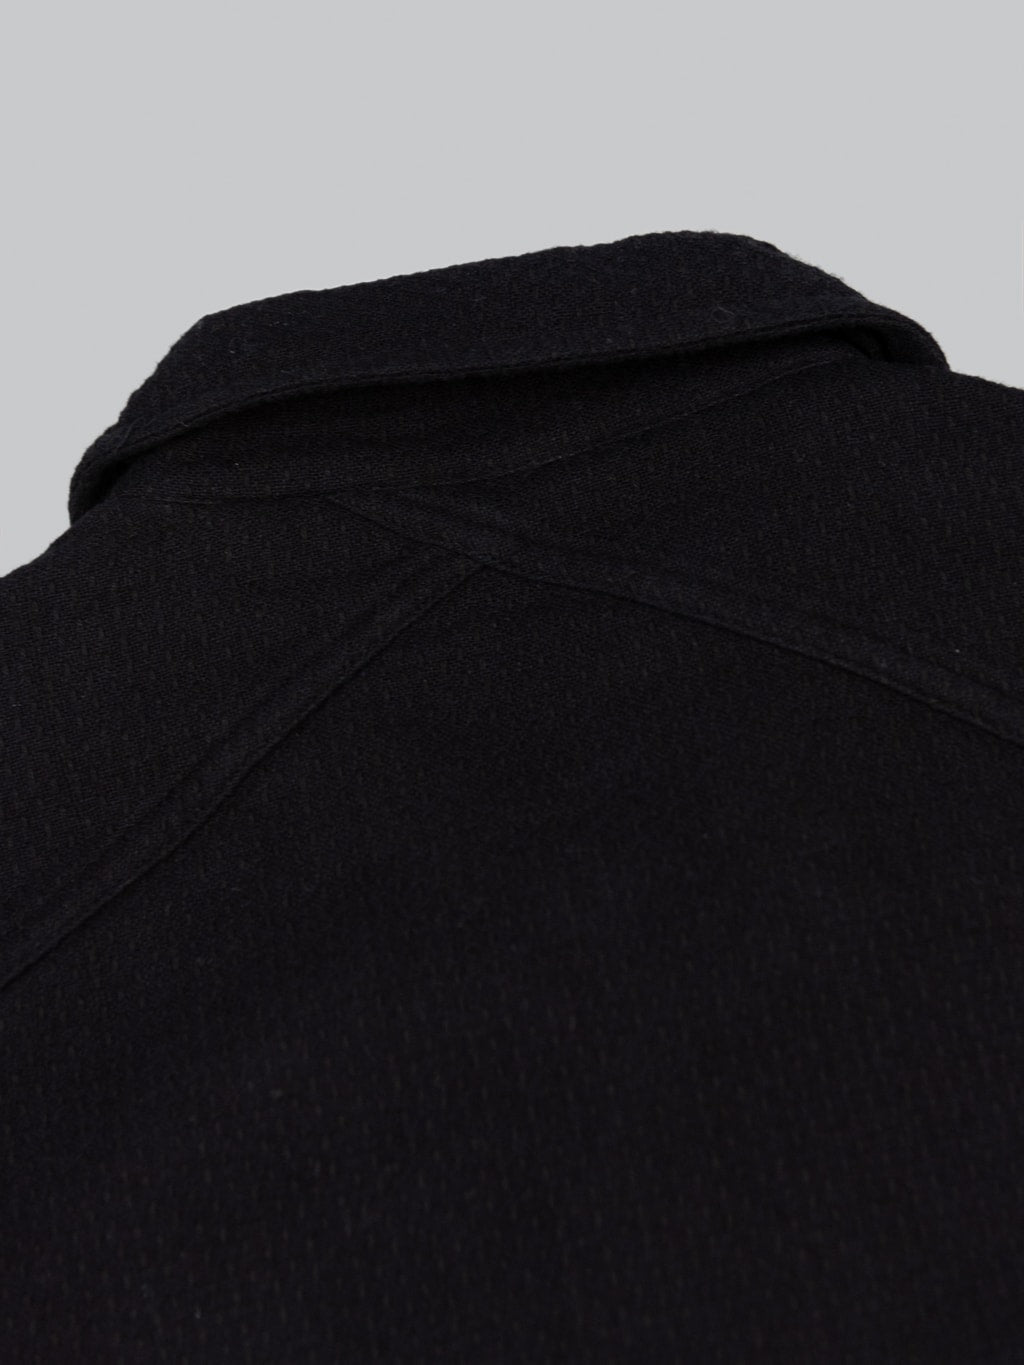 3sixteen CPO Shirt black Sashiko back collar